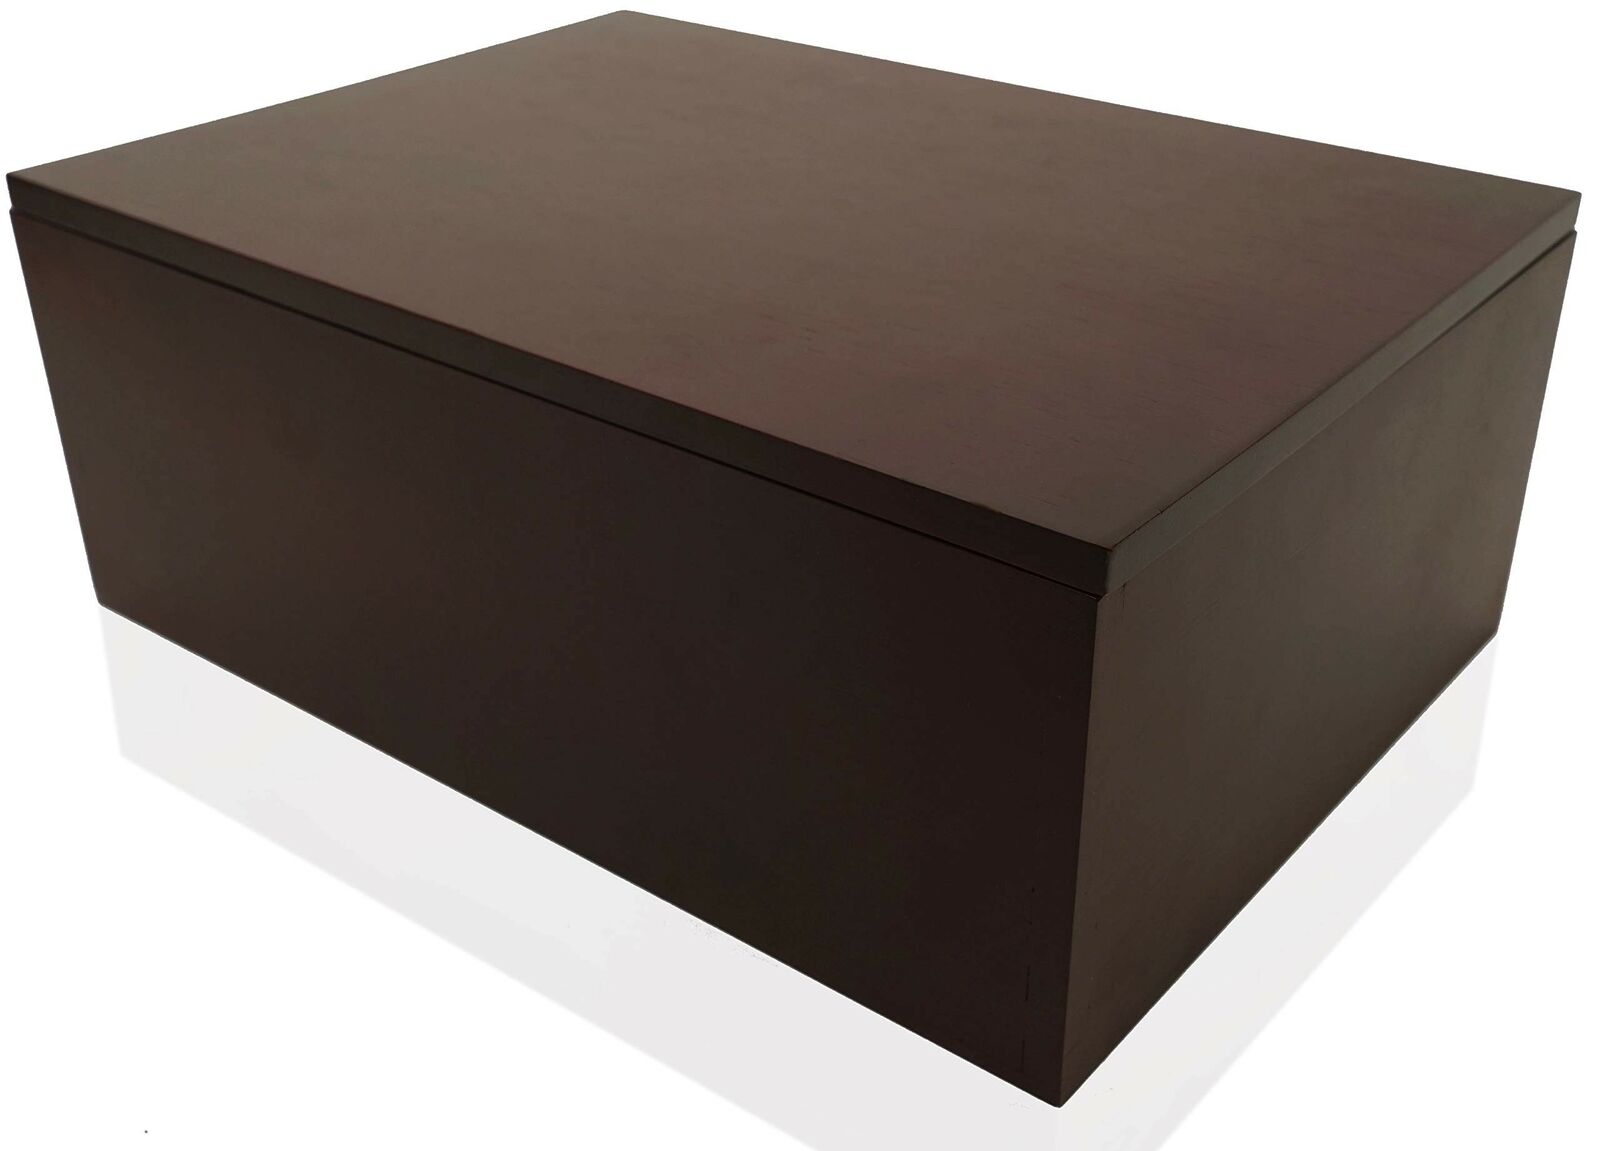 Wood Stash Box with Rolling Tray - Large Wood Stash Box w/Storage Dark Brown